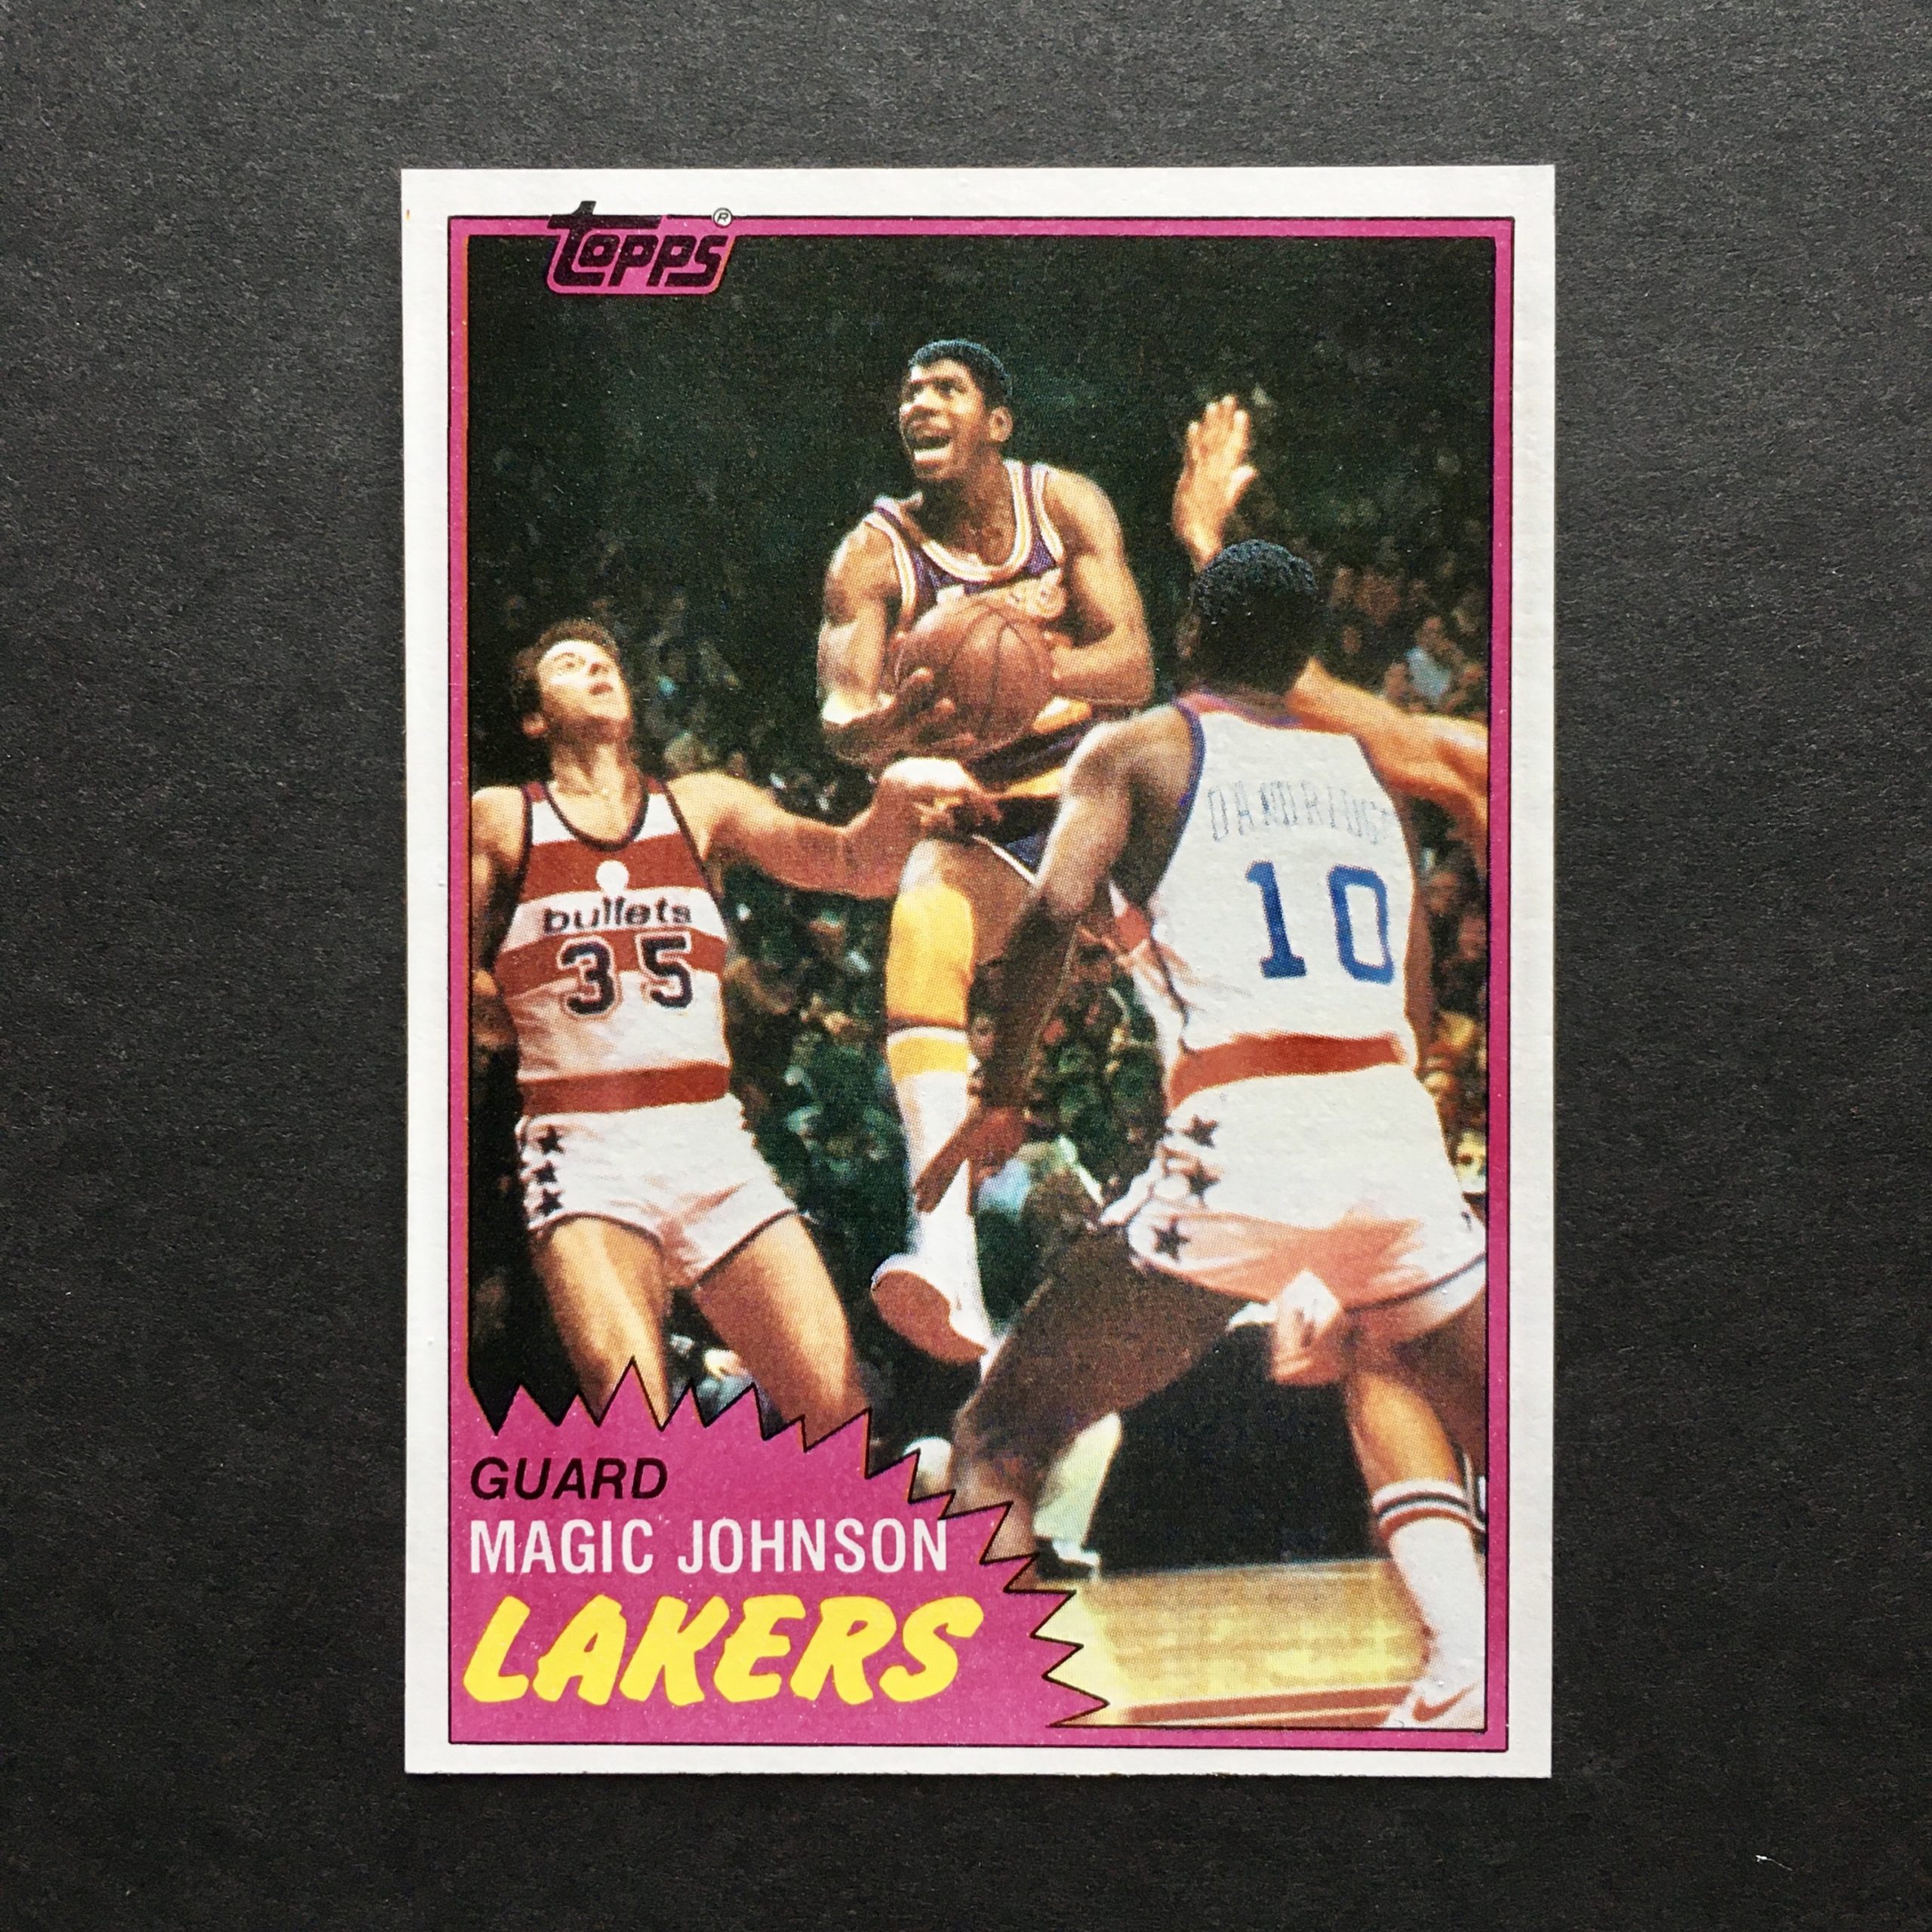 Magic Johnson 1981-82 Topps Card